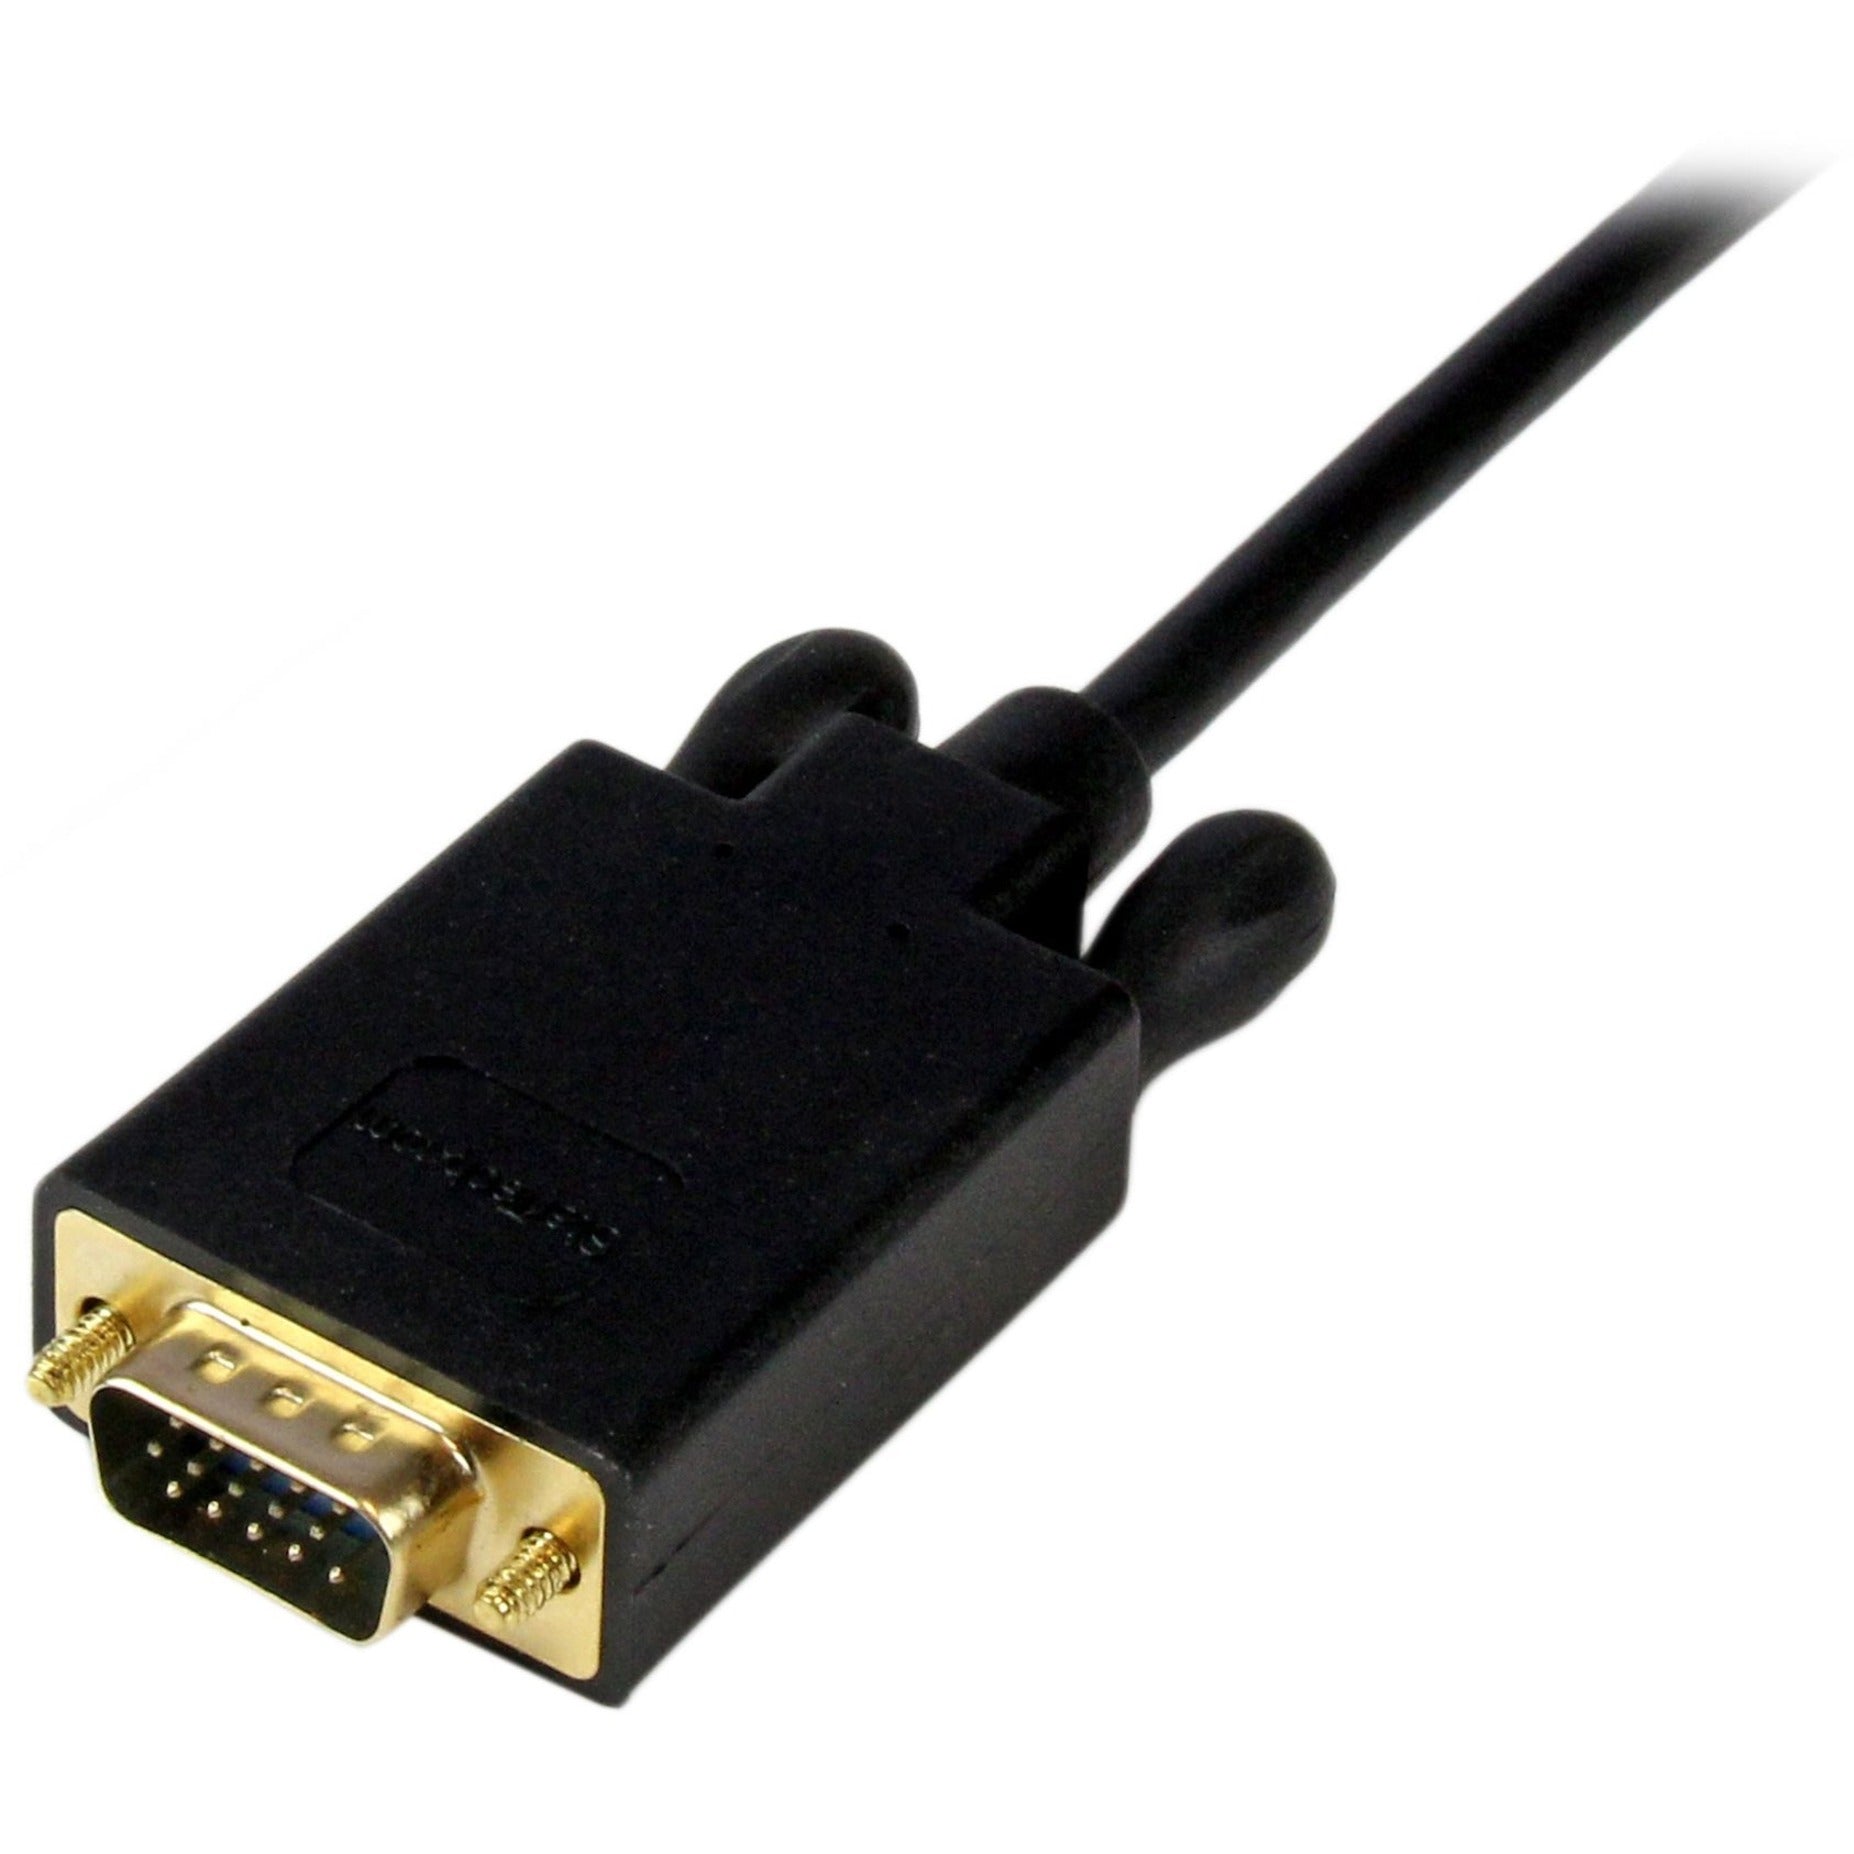 StarTech.com MDP2VGAMM3B Mini DisplayPort to VGA Adapter Converter Cable - Black, 3 ft, 1920x1200